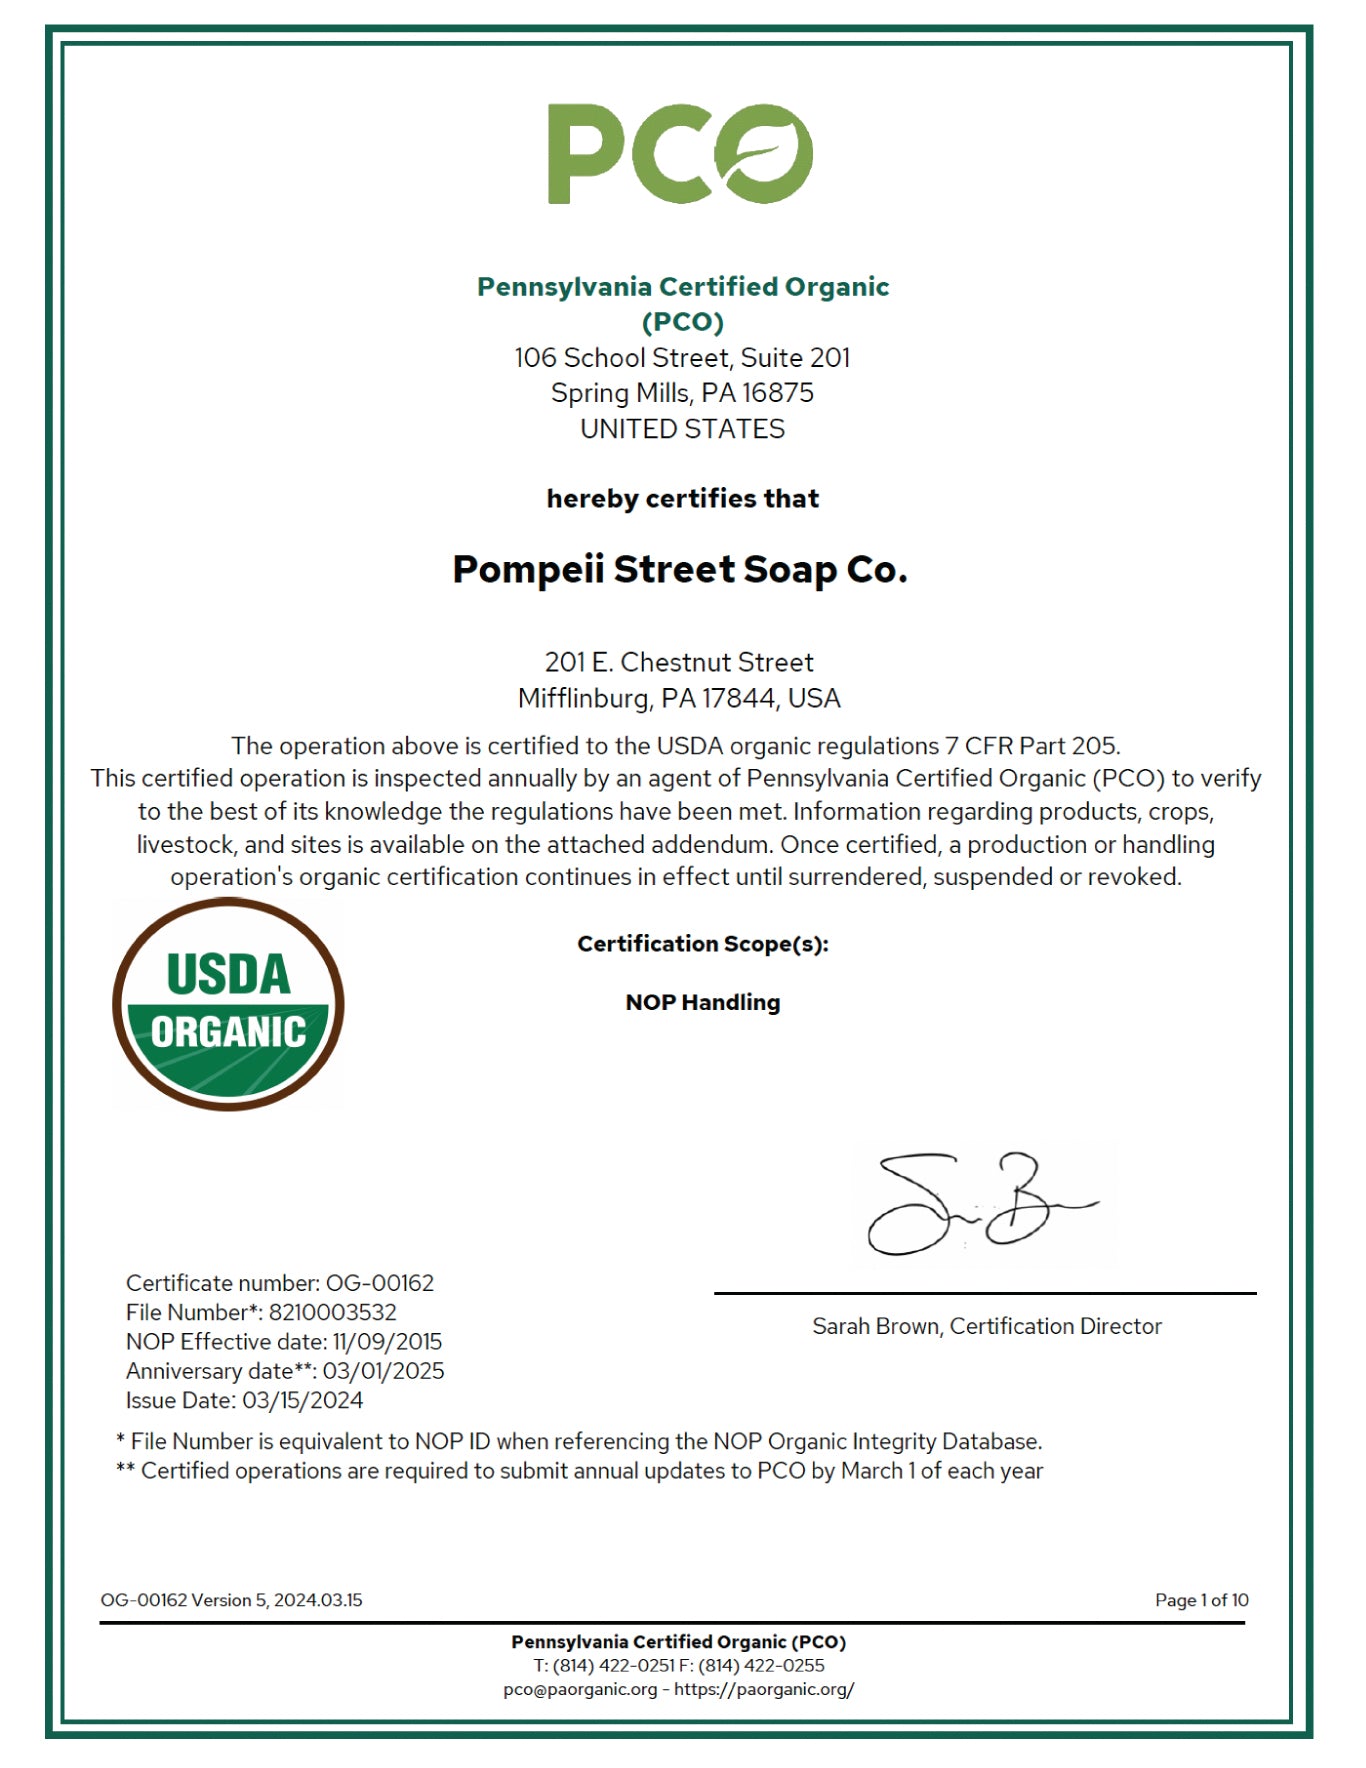 Pennsylvania Certified Organic Certificate